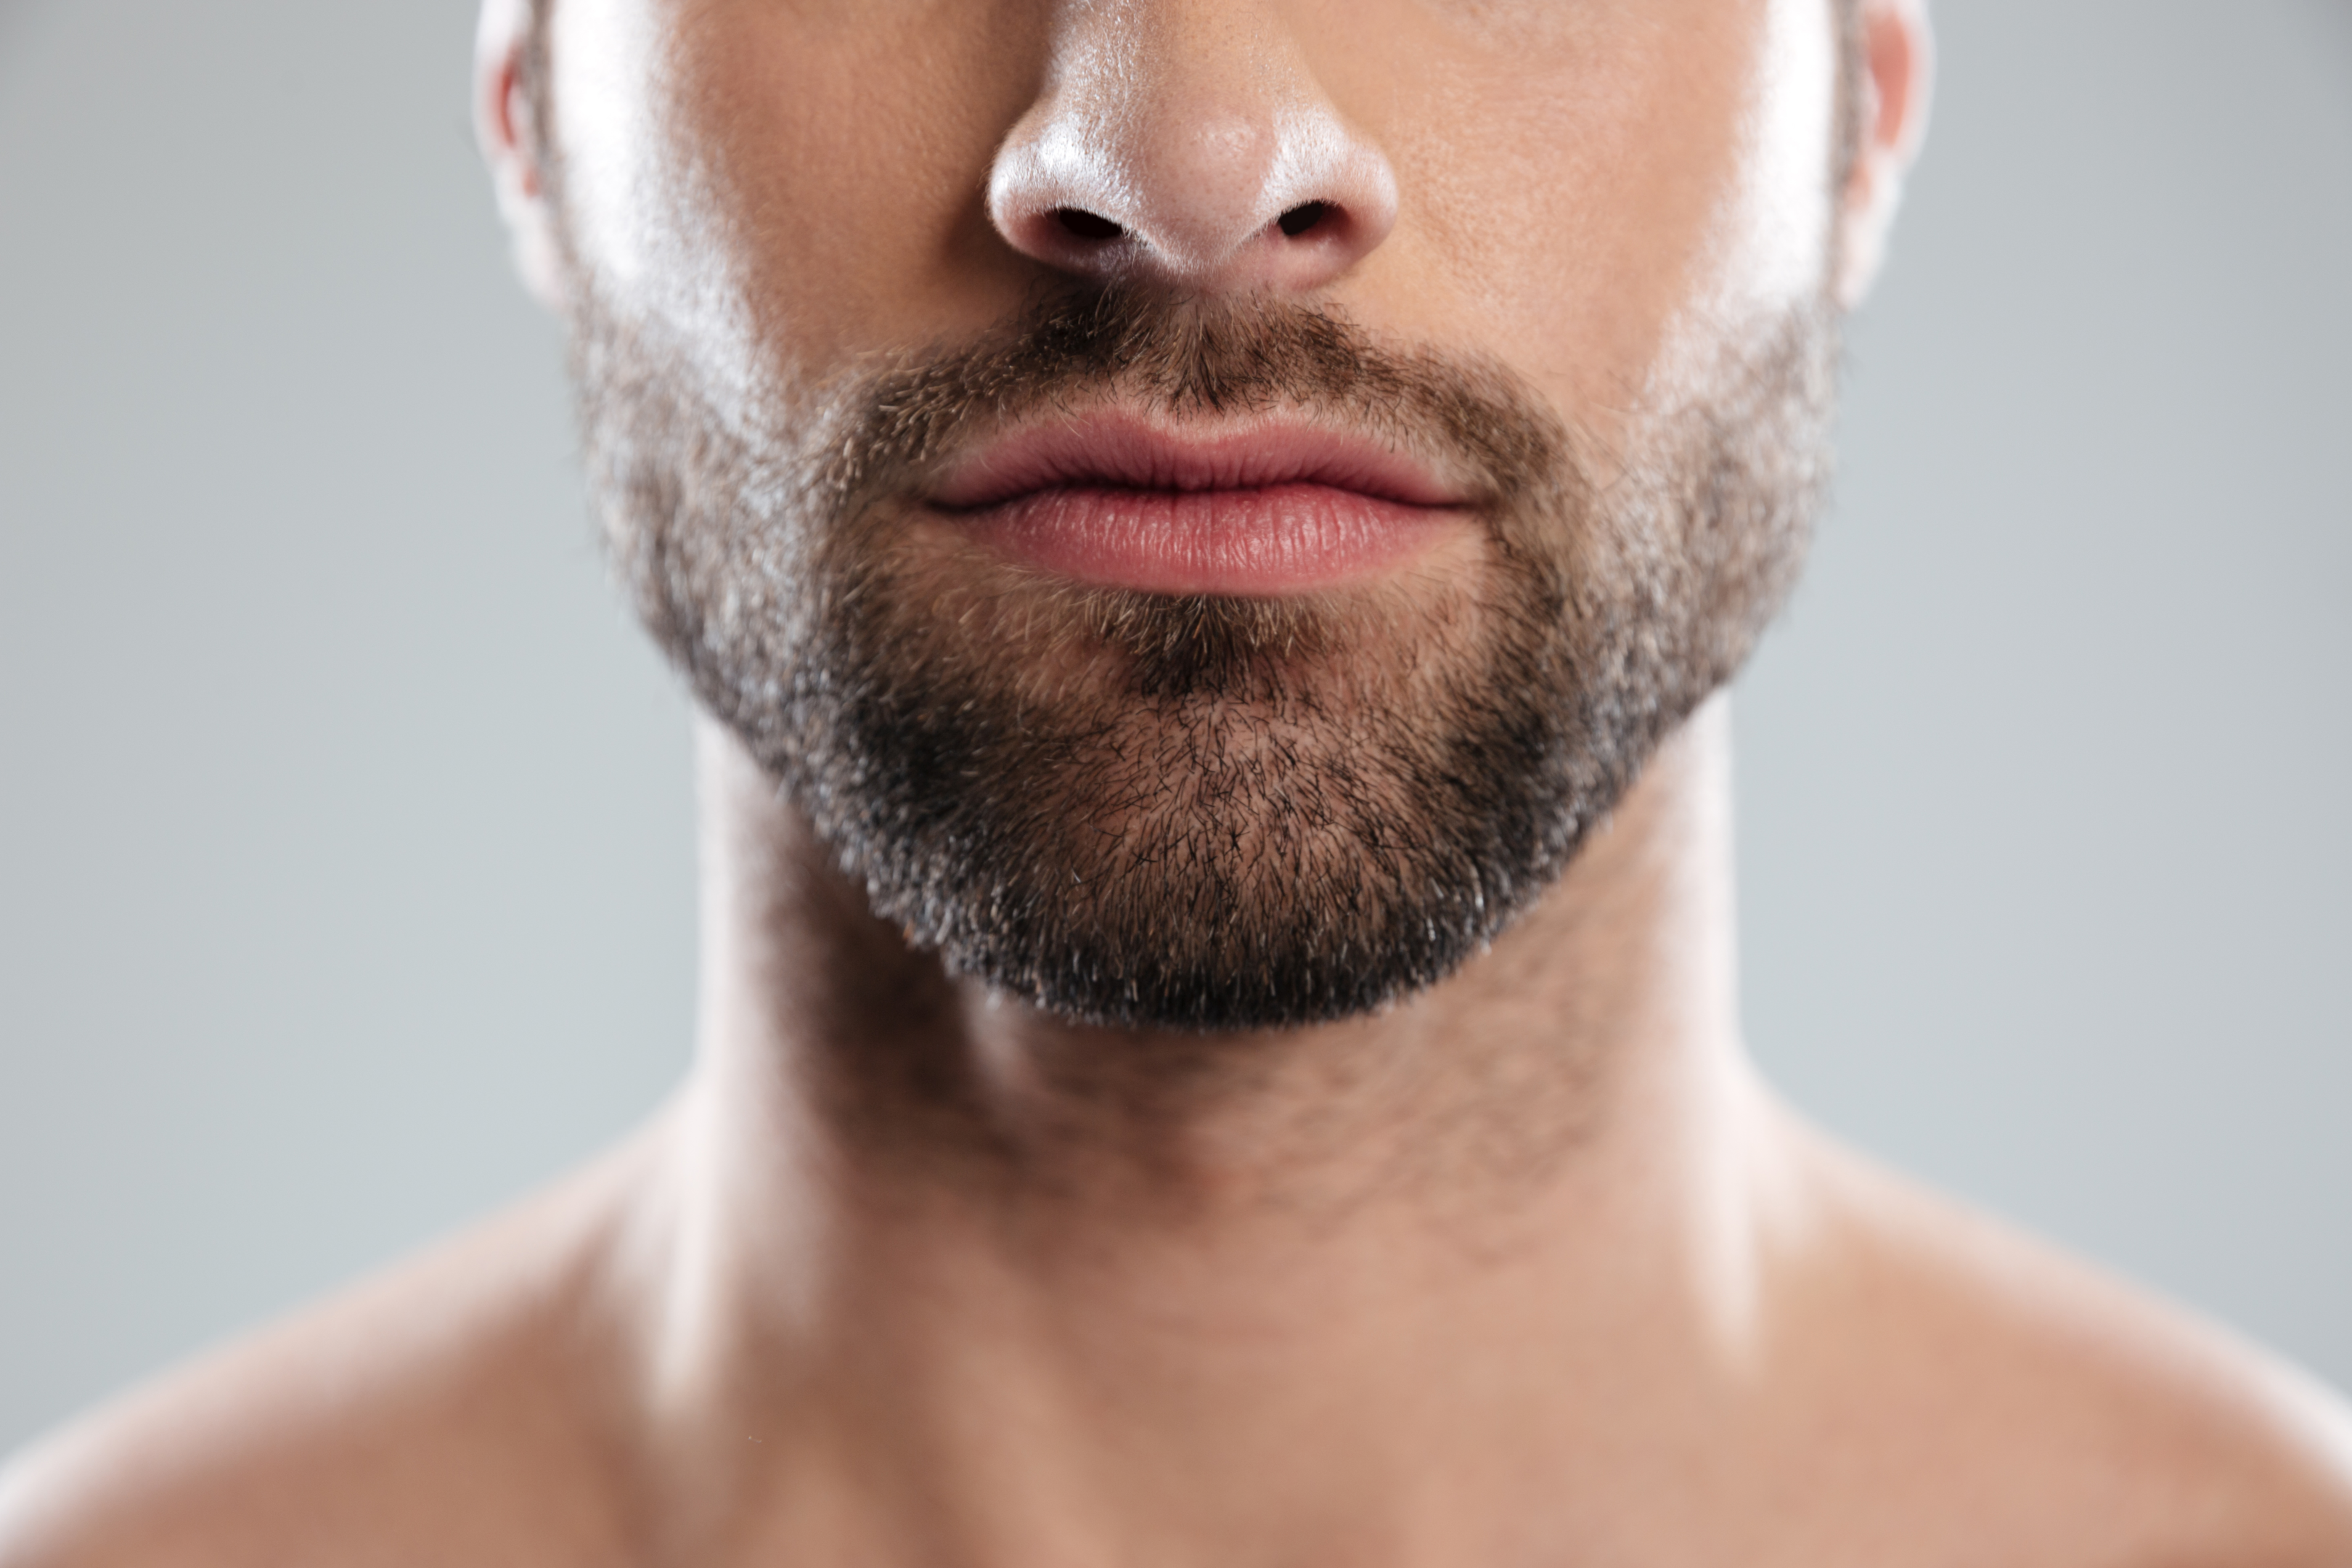 alopecia barbae affects hair follicles related to beard hair and facial hair leading to beard hair loss